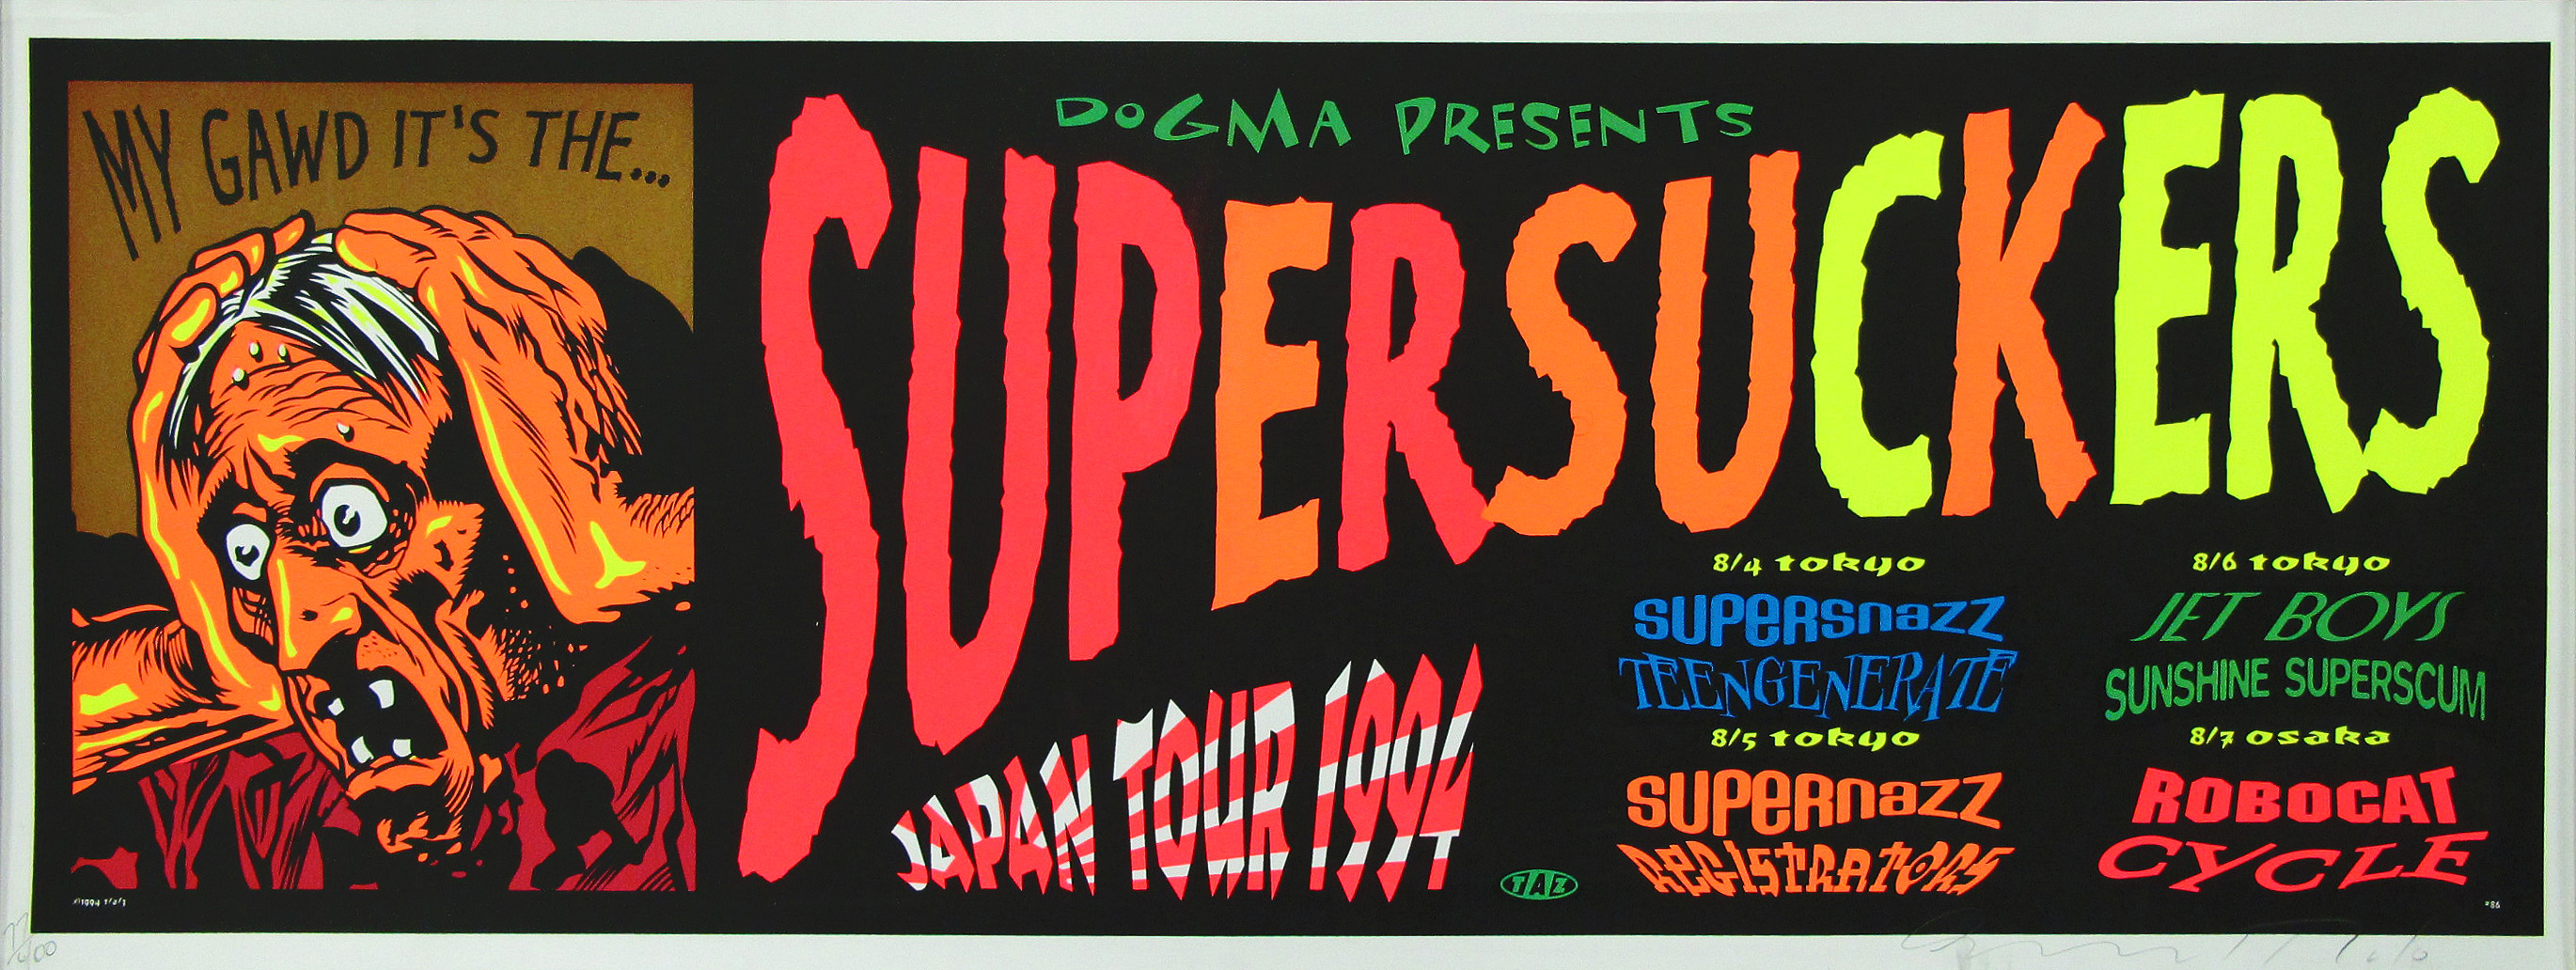 Supersuckers Tour Poster